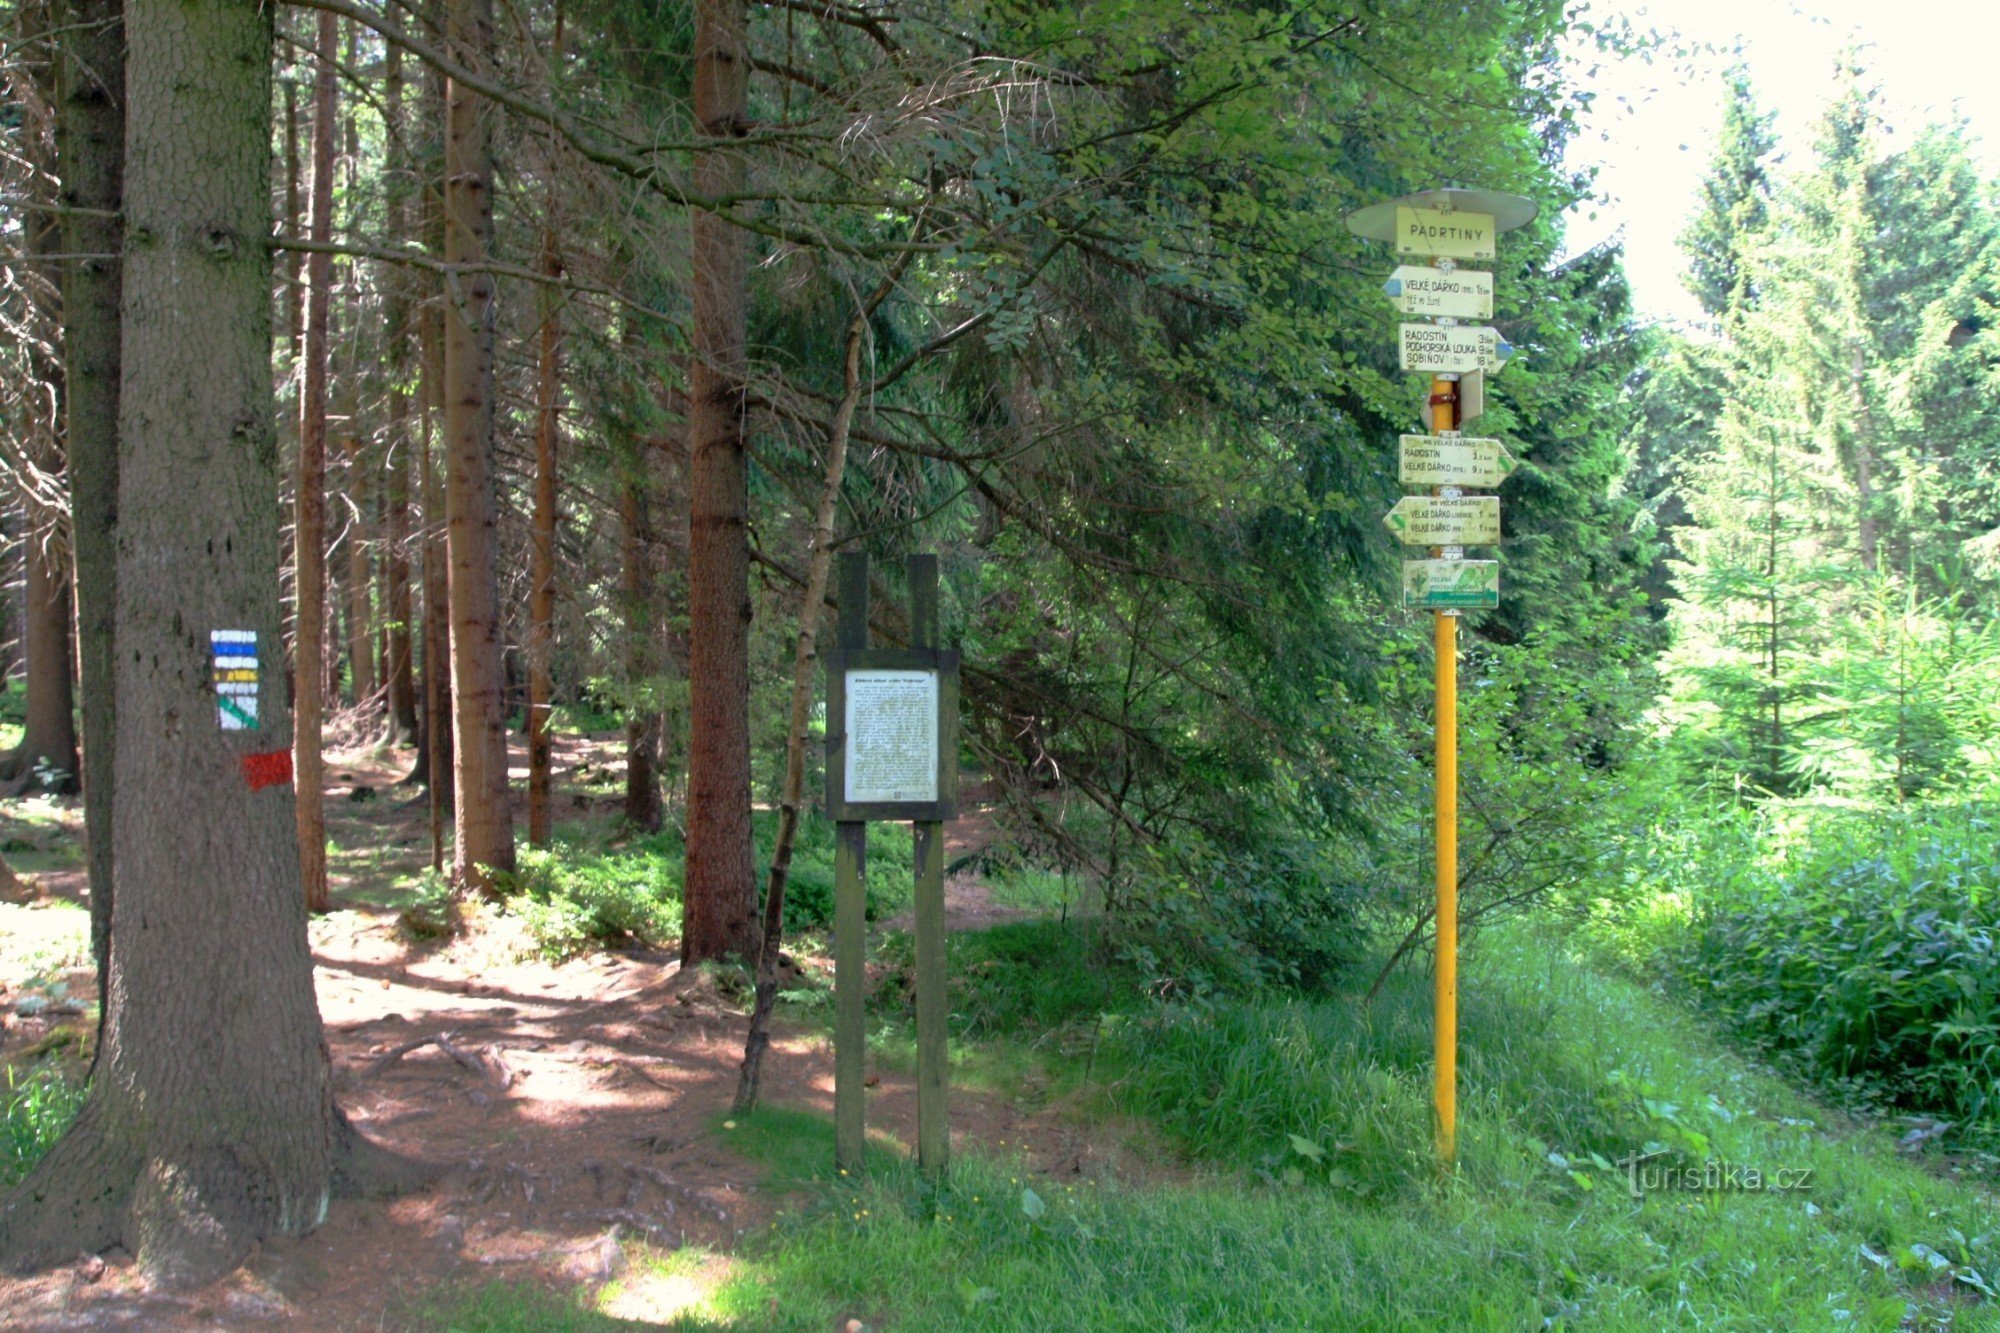 Tourist crossroads of Padrtina